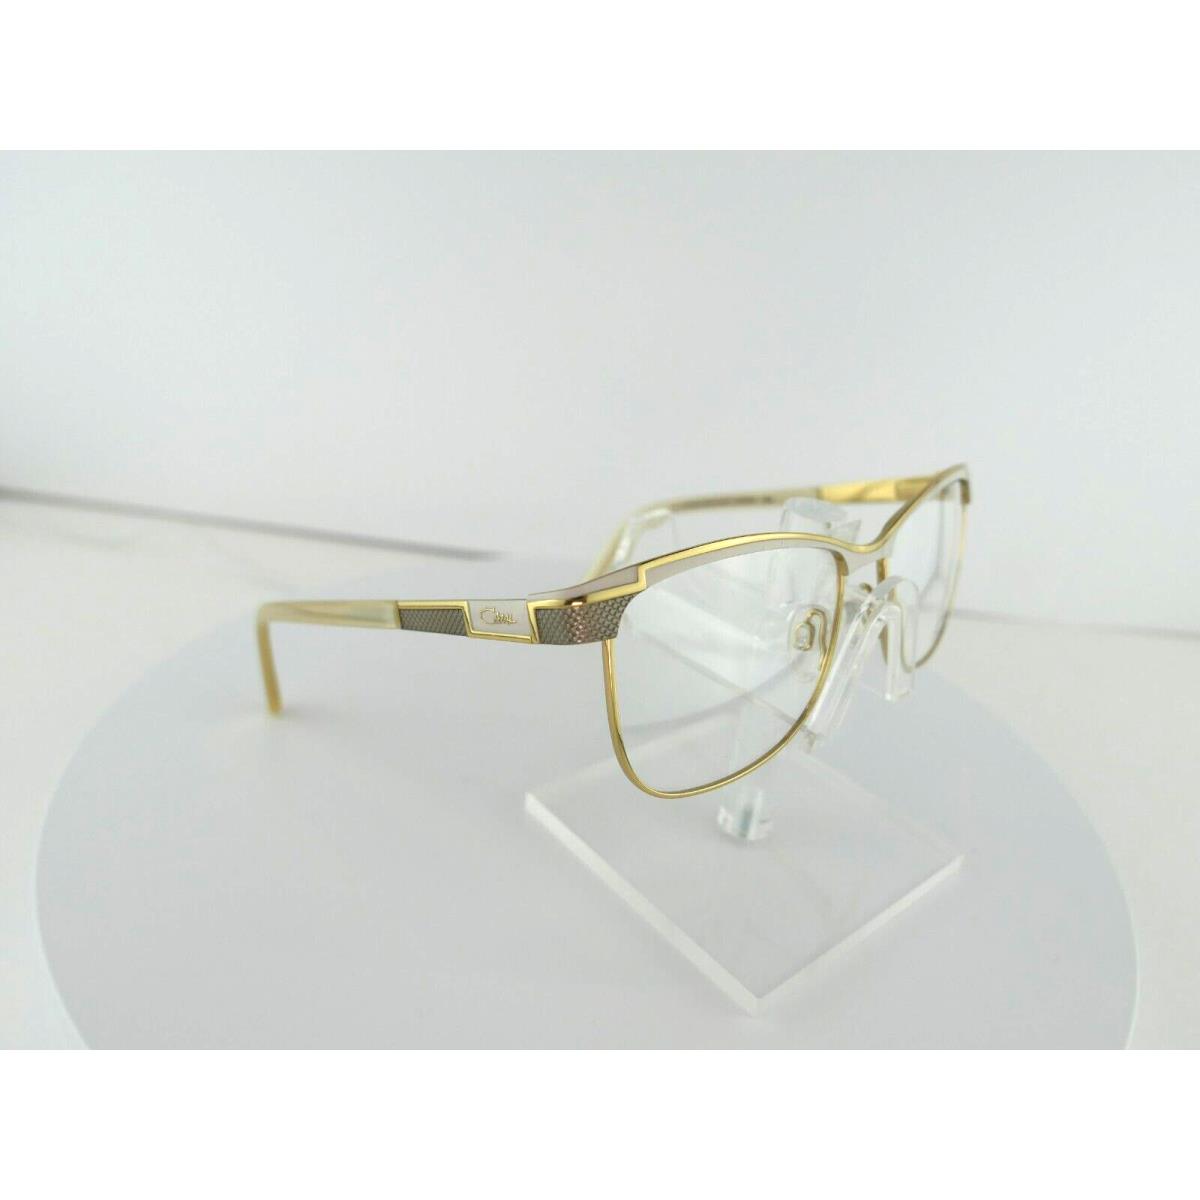 Cazal eyeglasses  - Frame: 7